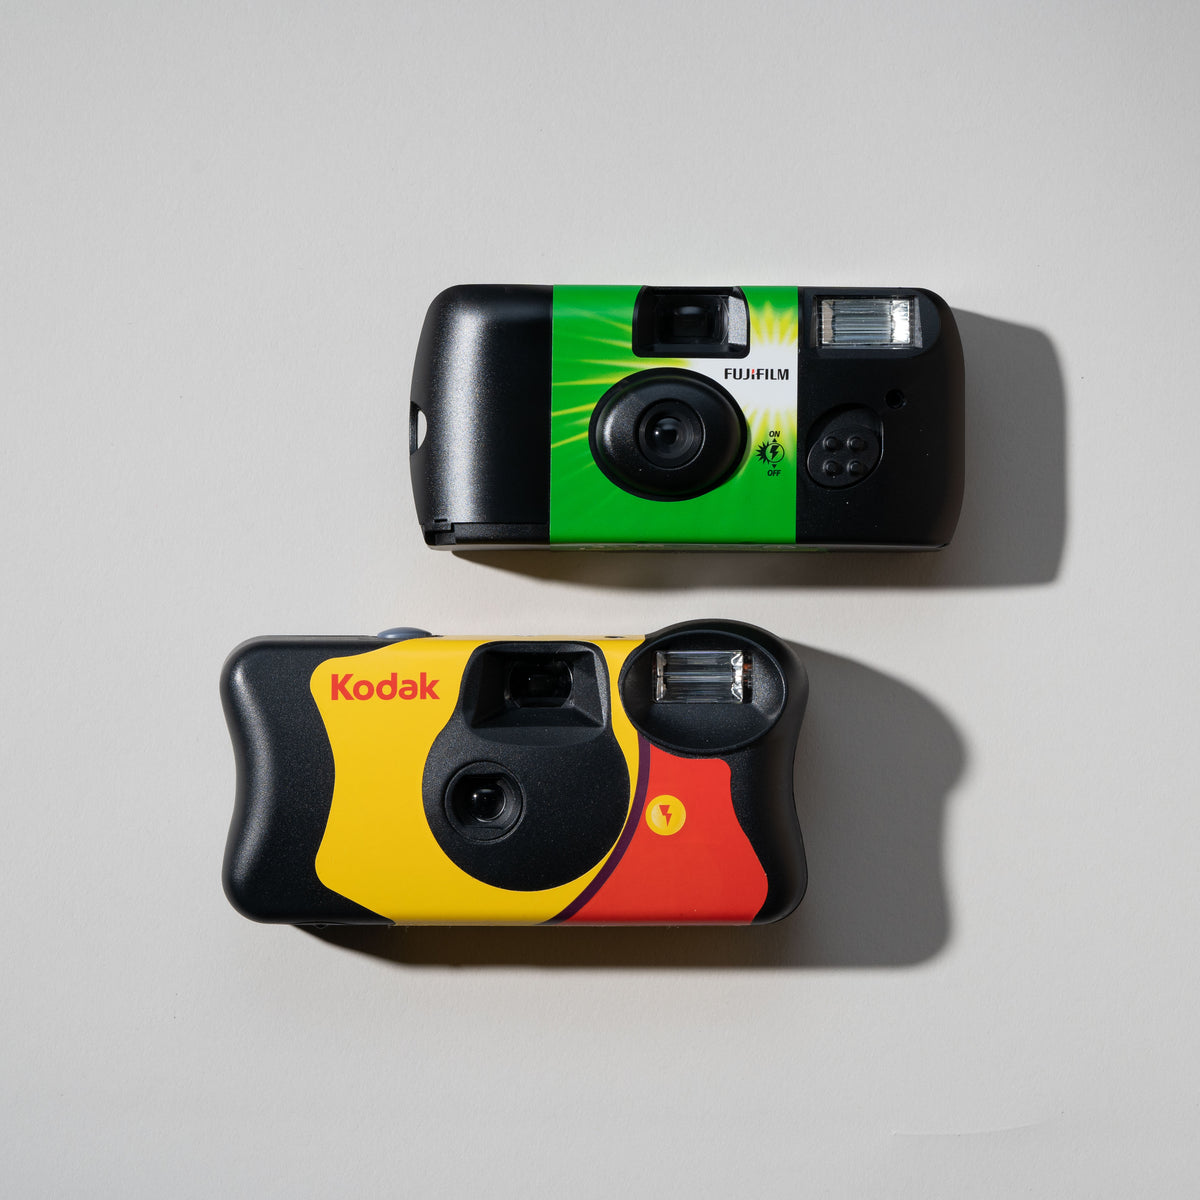 Intro to Disposable Cameras: The Fujifilm Quicksnap and The Kodak